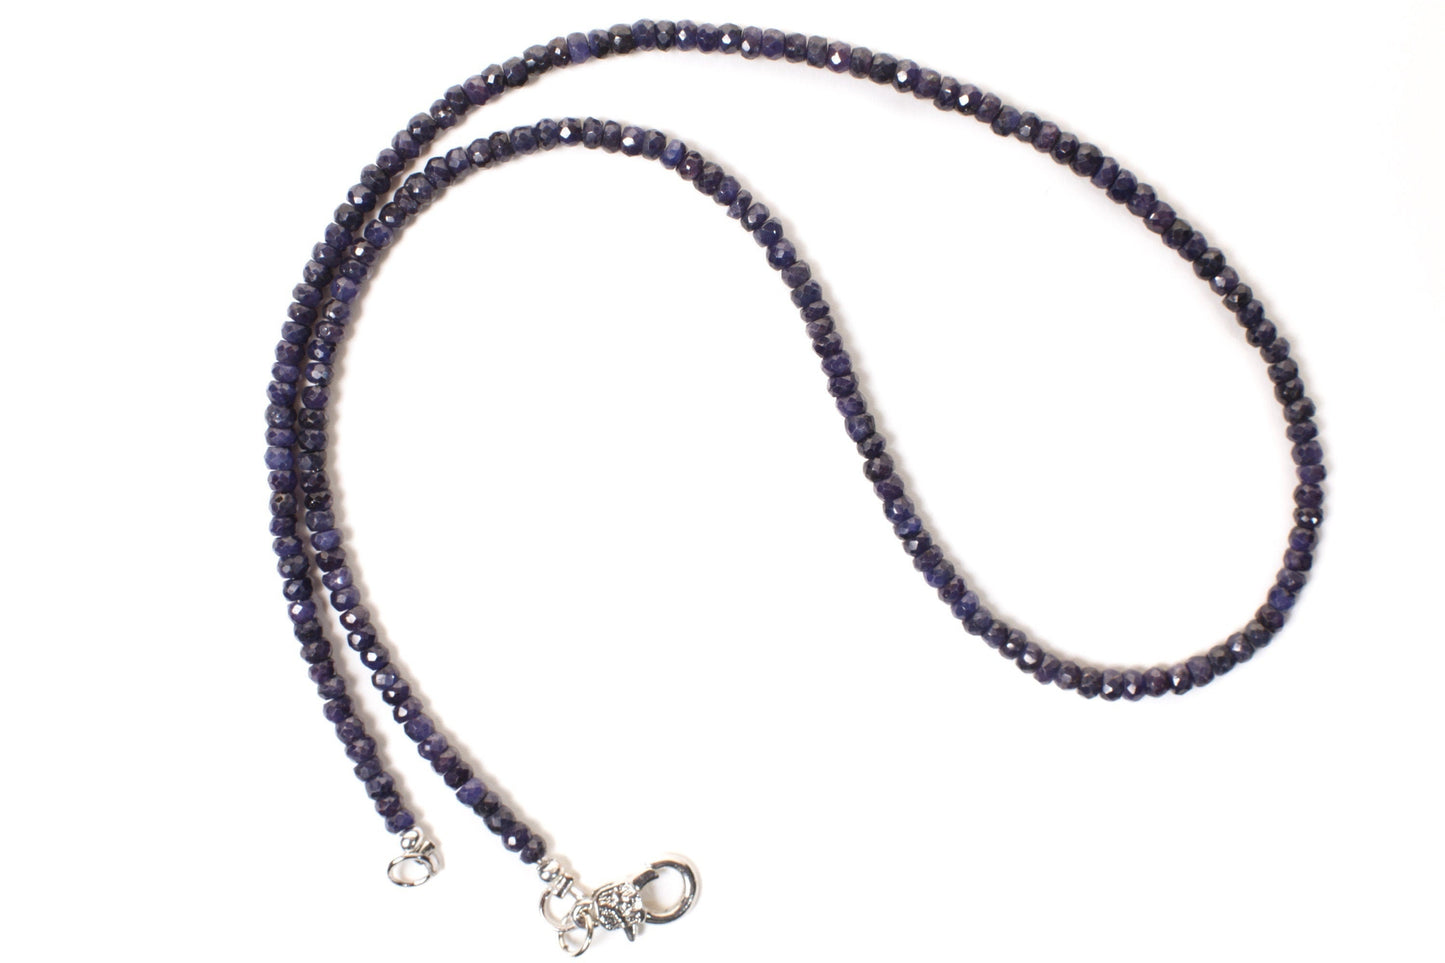 Genuine Sapphire Faceted Roundel 4mm Dark Blue Sapphire Gemstone Statement Necklace with Fancy Rhodium Silver lobster clasp